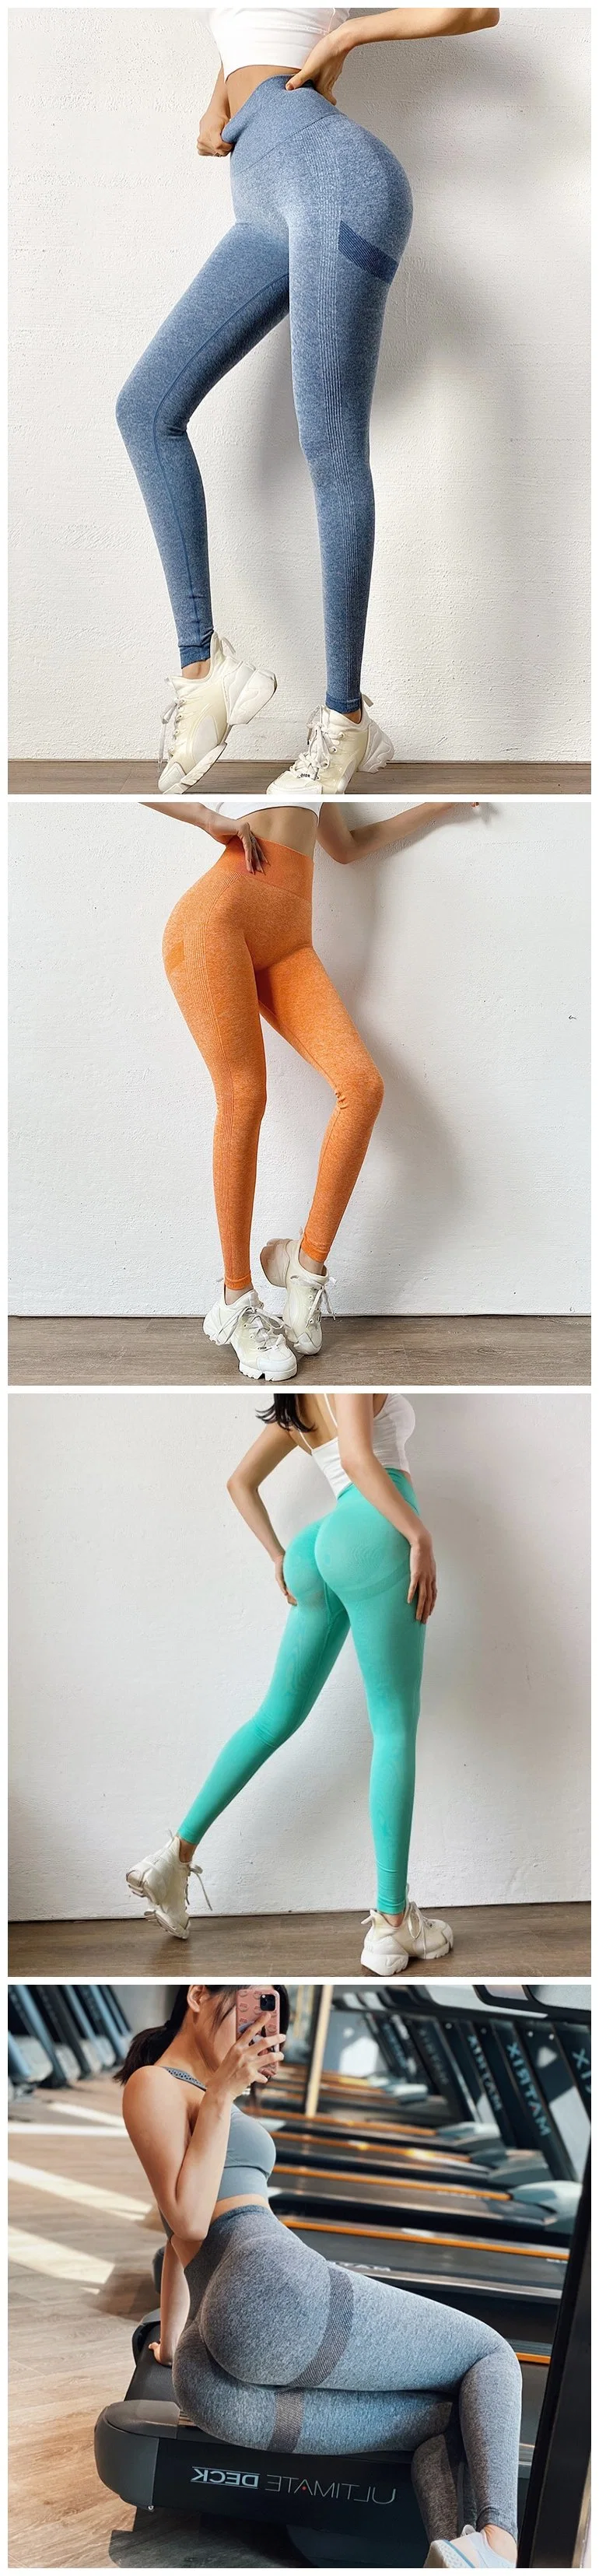 Xsunwing Wholesale Gym Legging Lulu Weightless Buttery Soft Quick Dry Running Train Yoga Pants High Rises Sweaty Workout Leggings